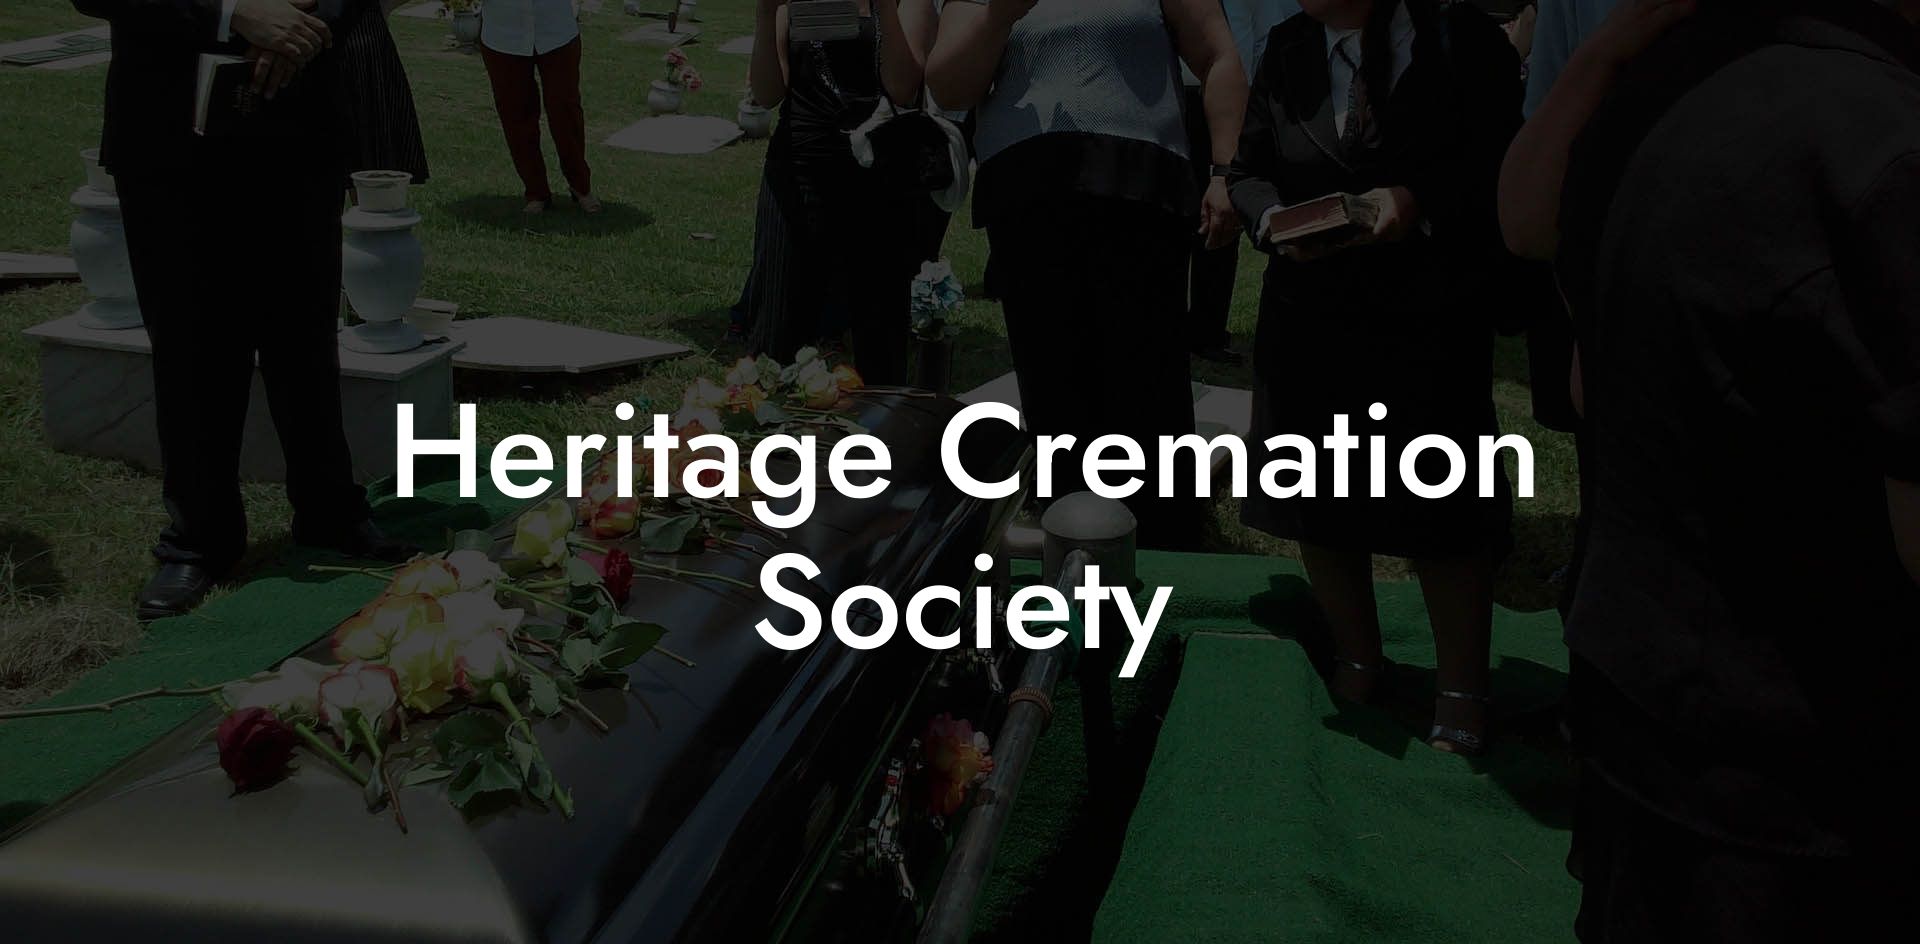 Heritage Cremation Society